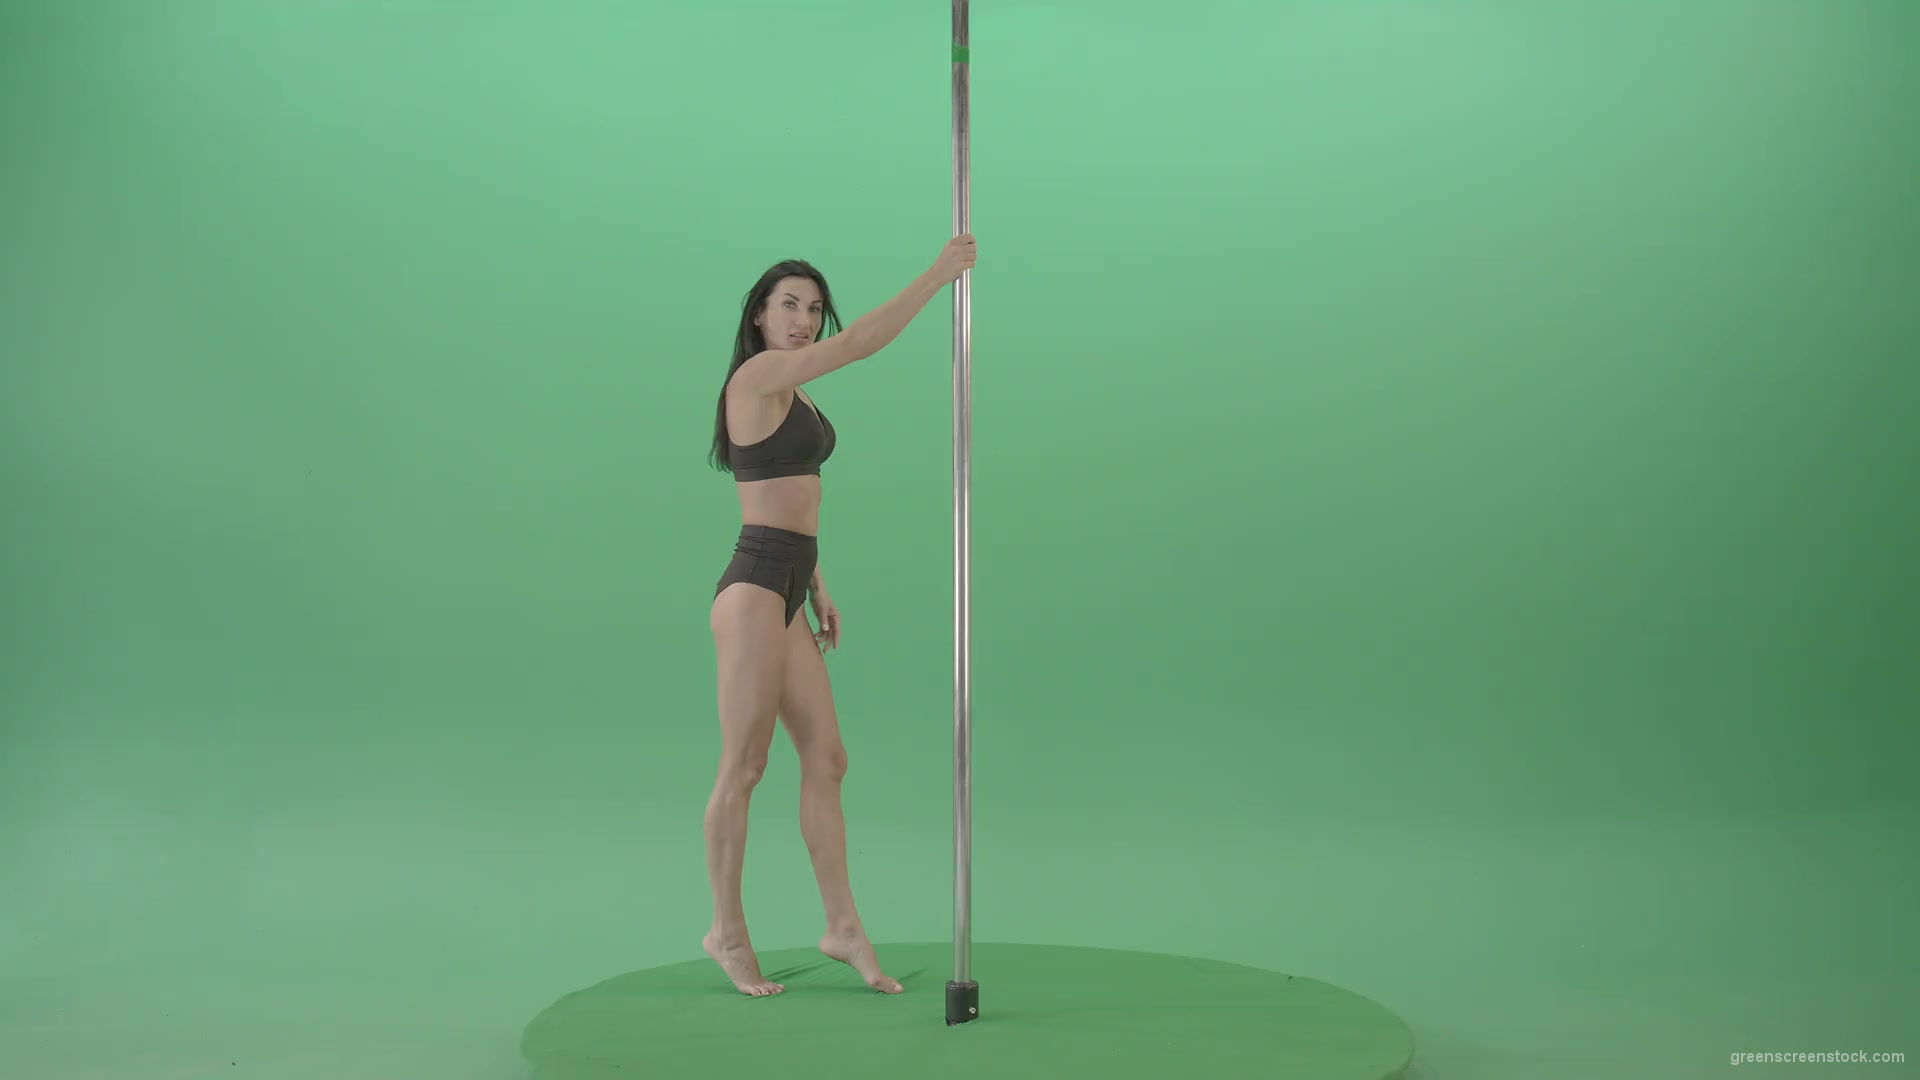 Artistic-gymnast-model-showing-strip-pole-dance-element-on-green-screen-4K-Video-Footage-1920_001 Green Screen Stock